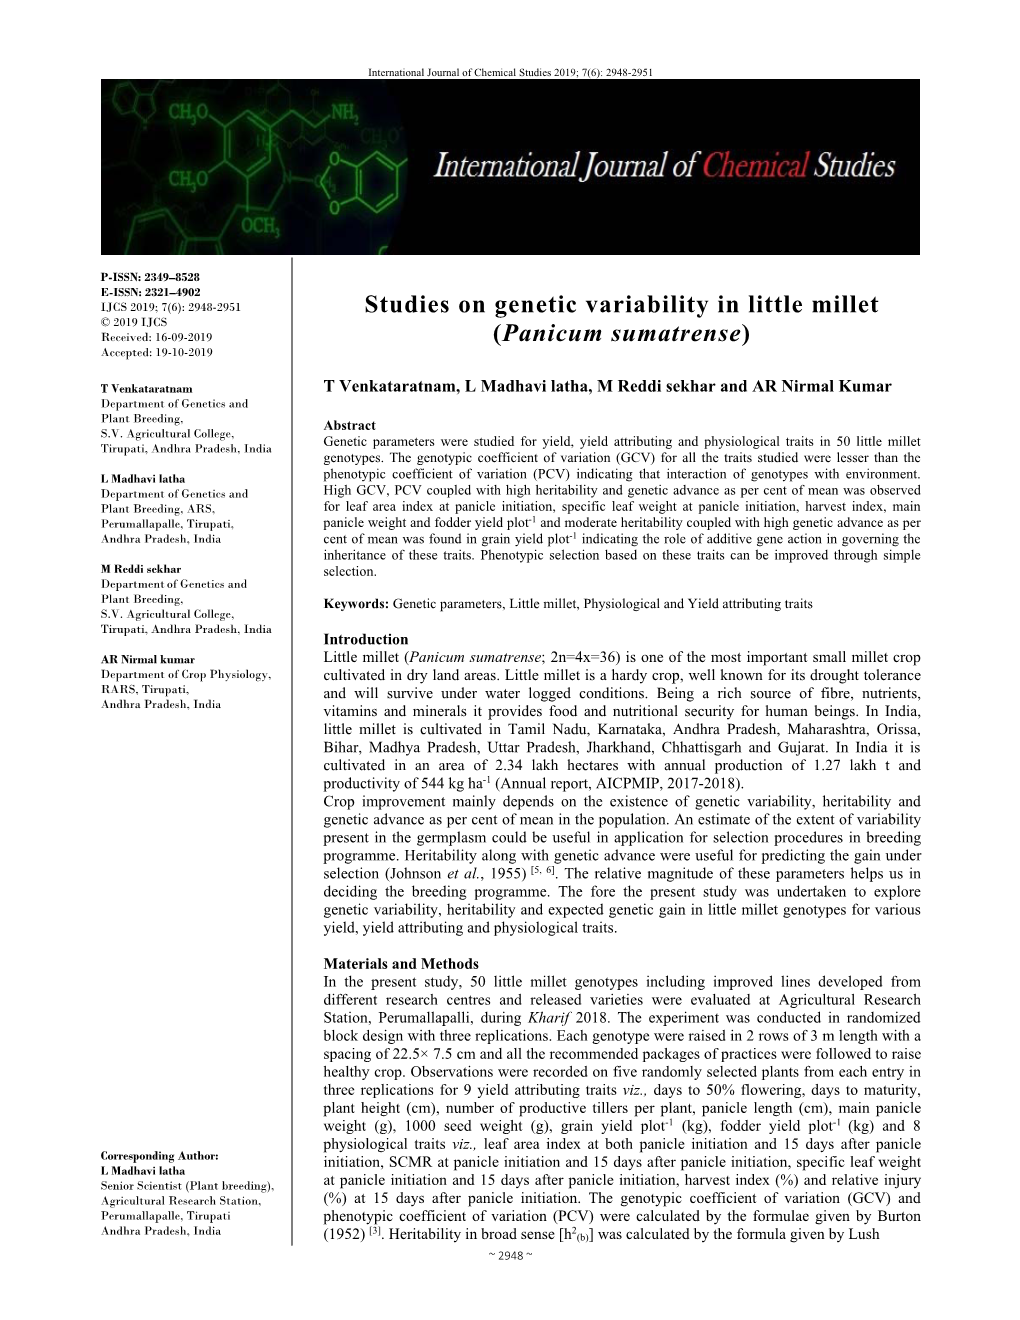 Studies on Genetic Variability in Little Millet (Panicum Sumatrense)